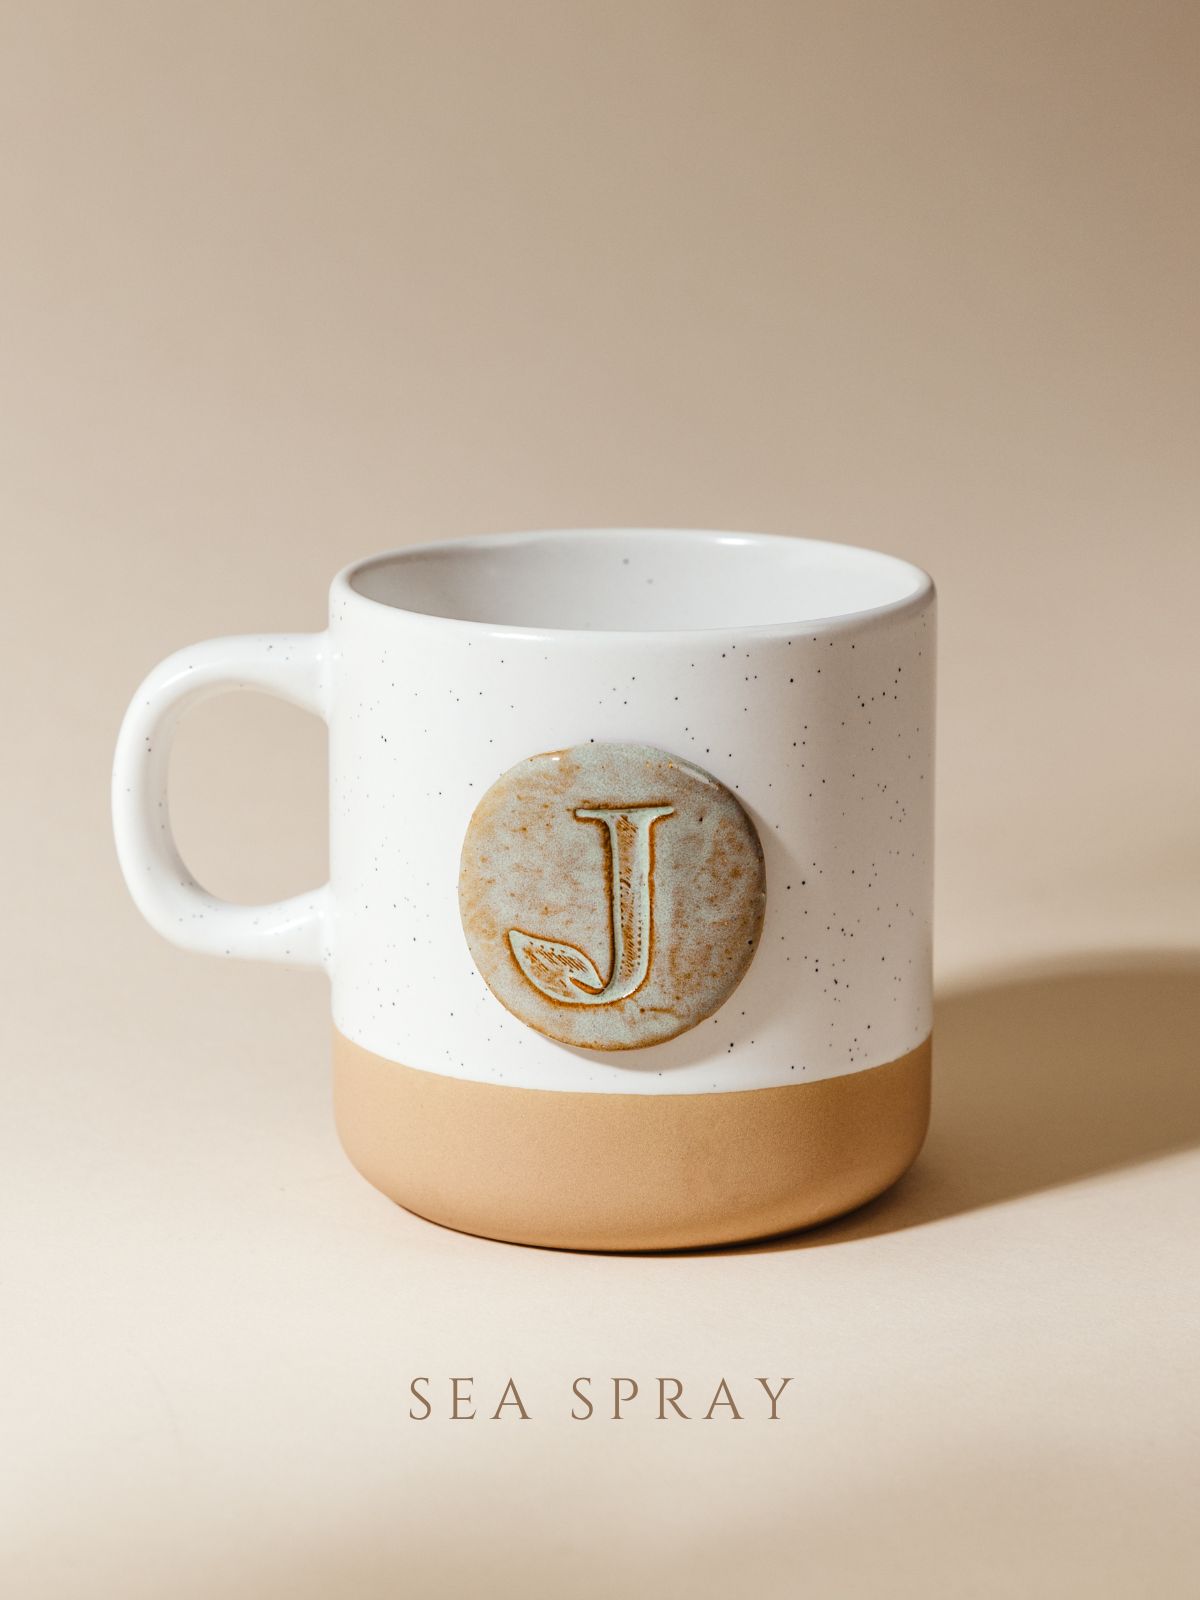 10 oz mug on cream background with sea spray glazed logo.